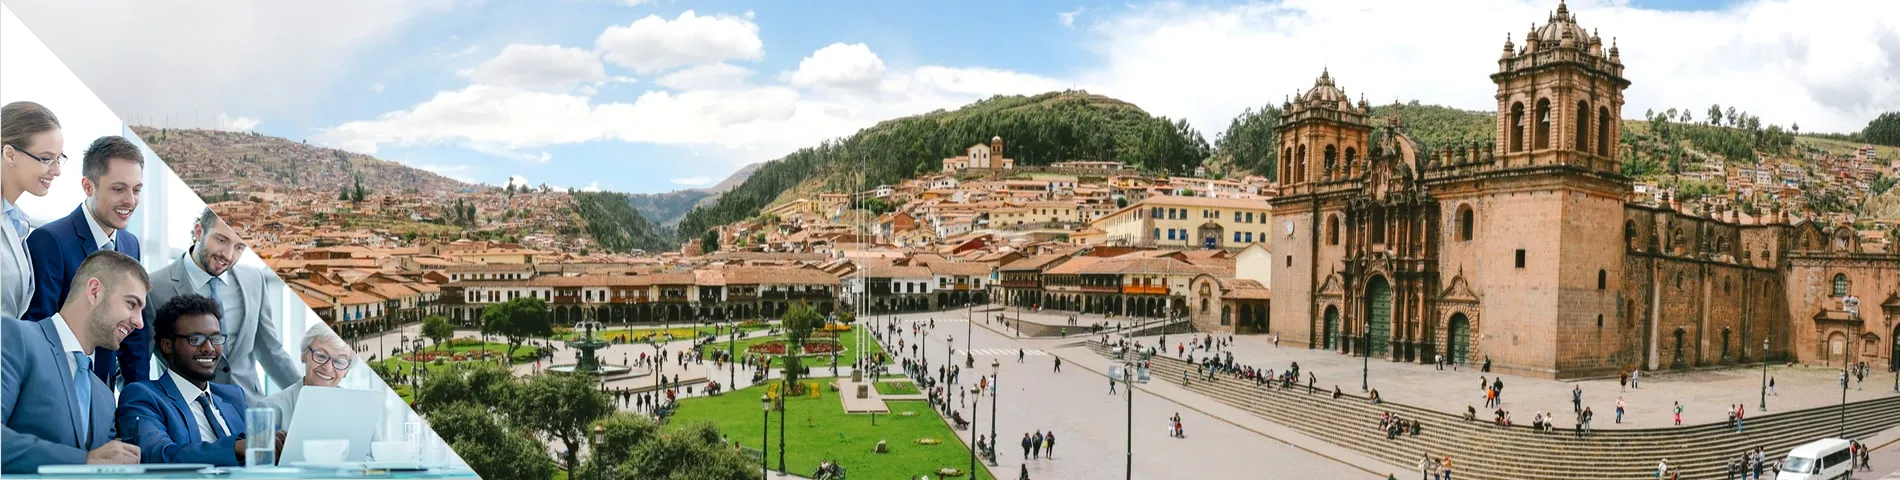 Cuzco - Biznes Grupa